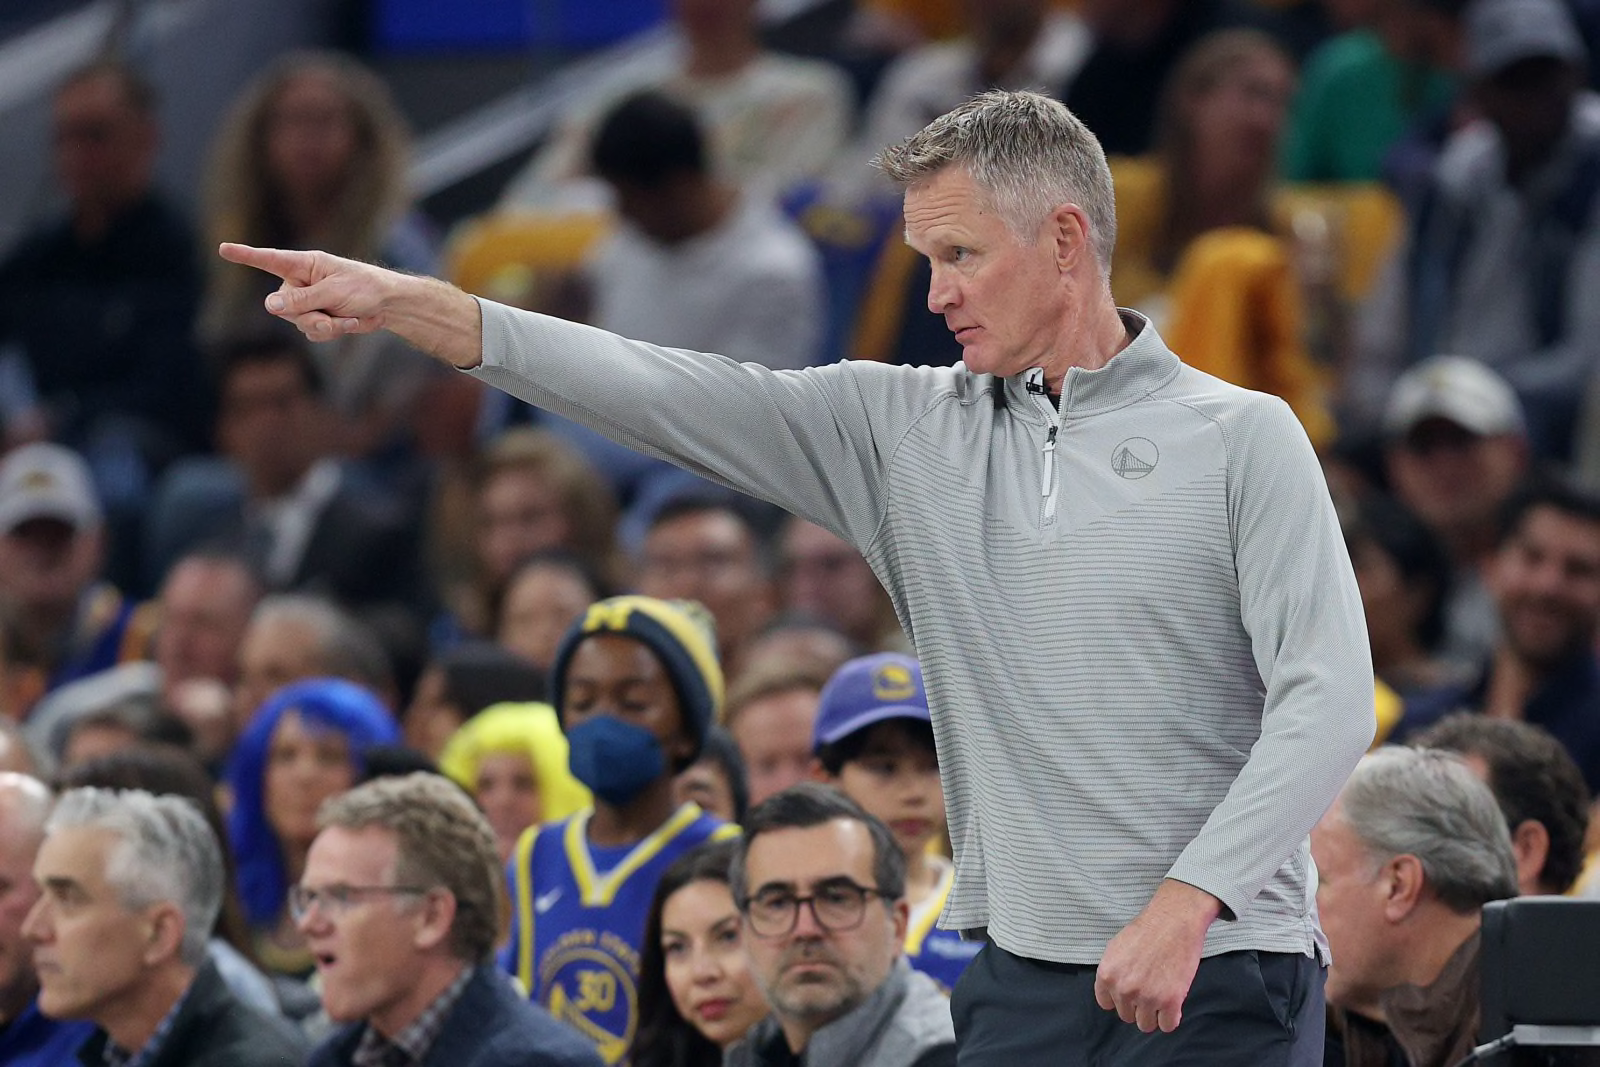 Warriors' Steve Kerr introduced as new USA national basketball team coach